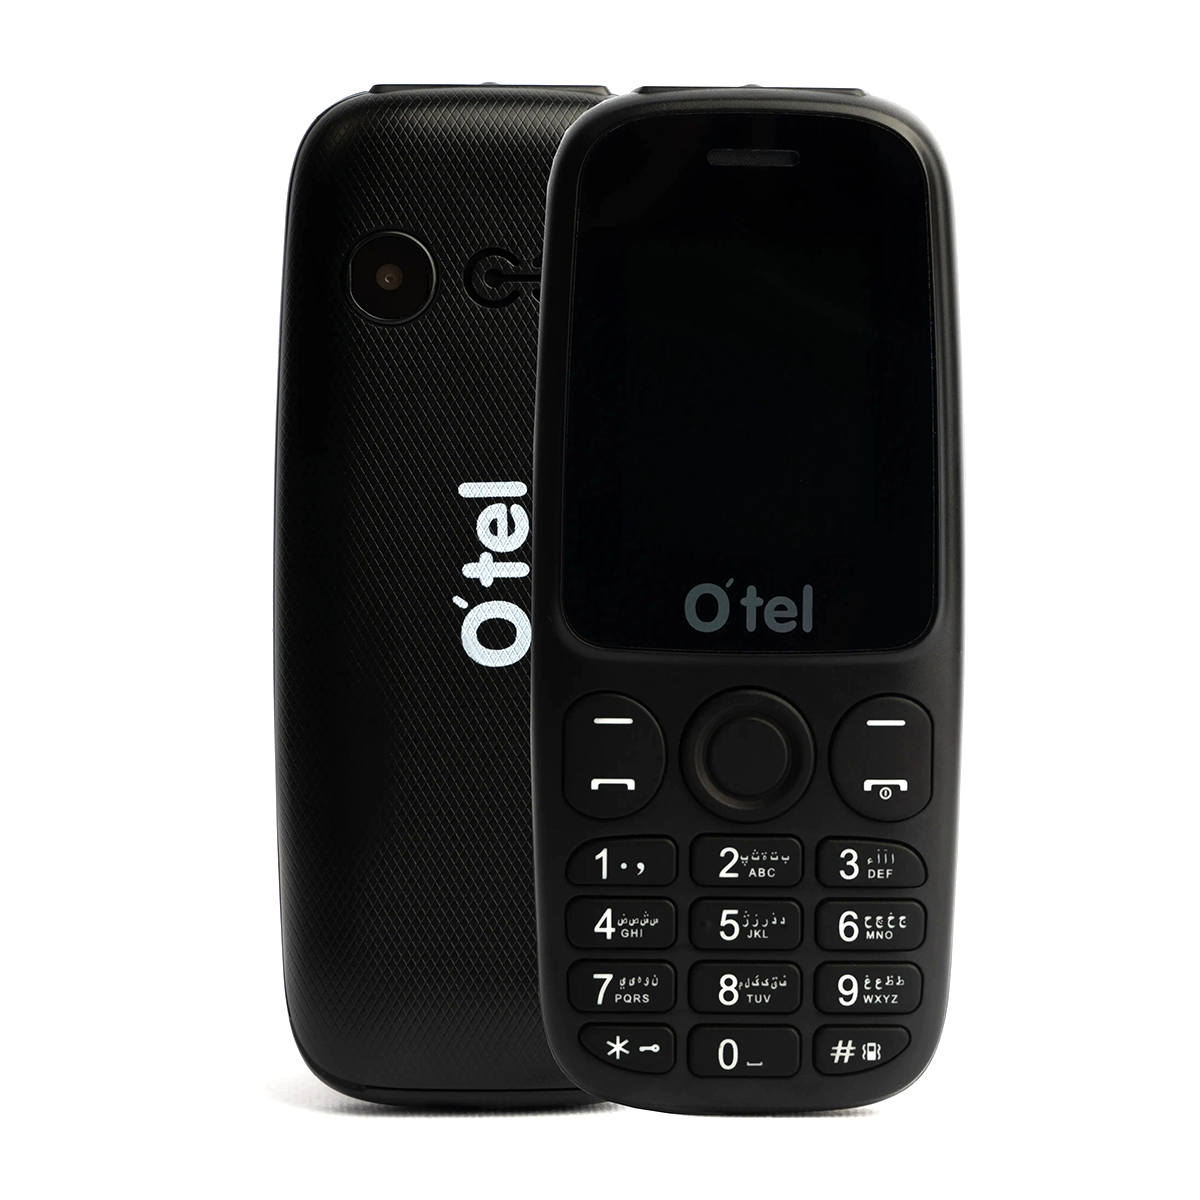 گوشی موبایل اوتل مدل F05 دو سیم کارت copy-small-image.png